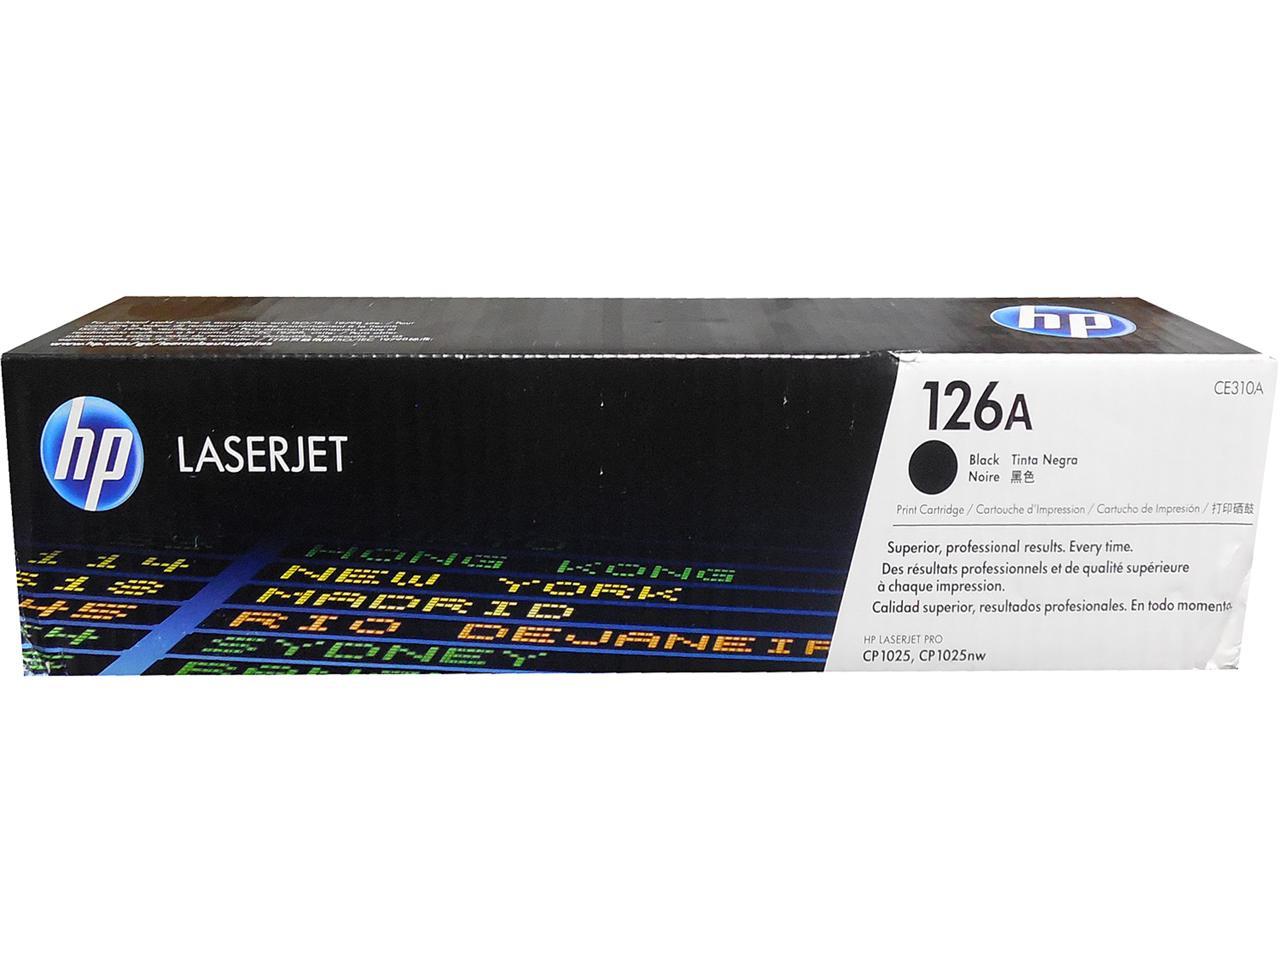 HP 126A CE310A Original LaserJet Toner Cartridge Black 